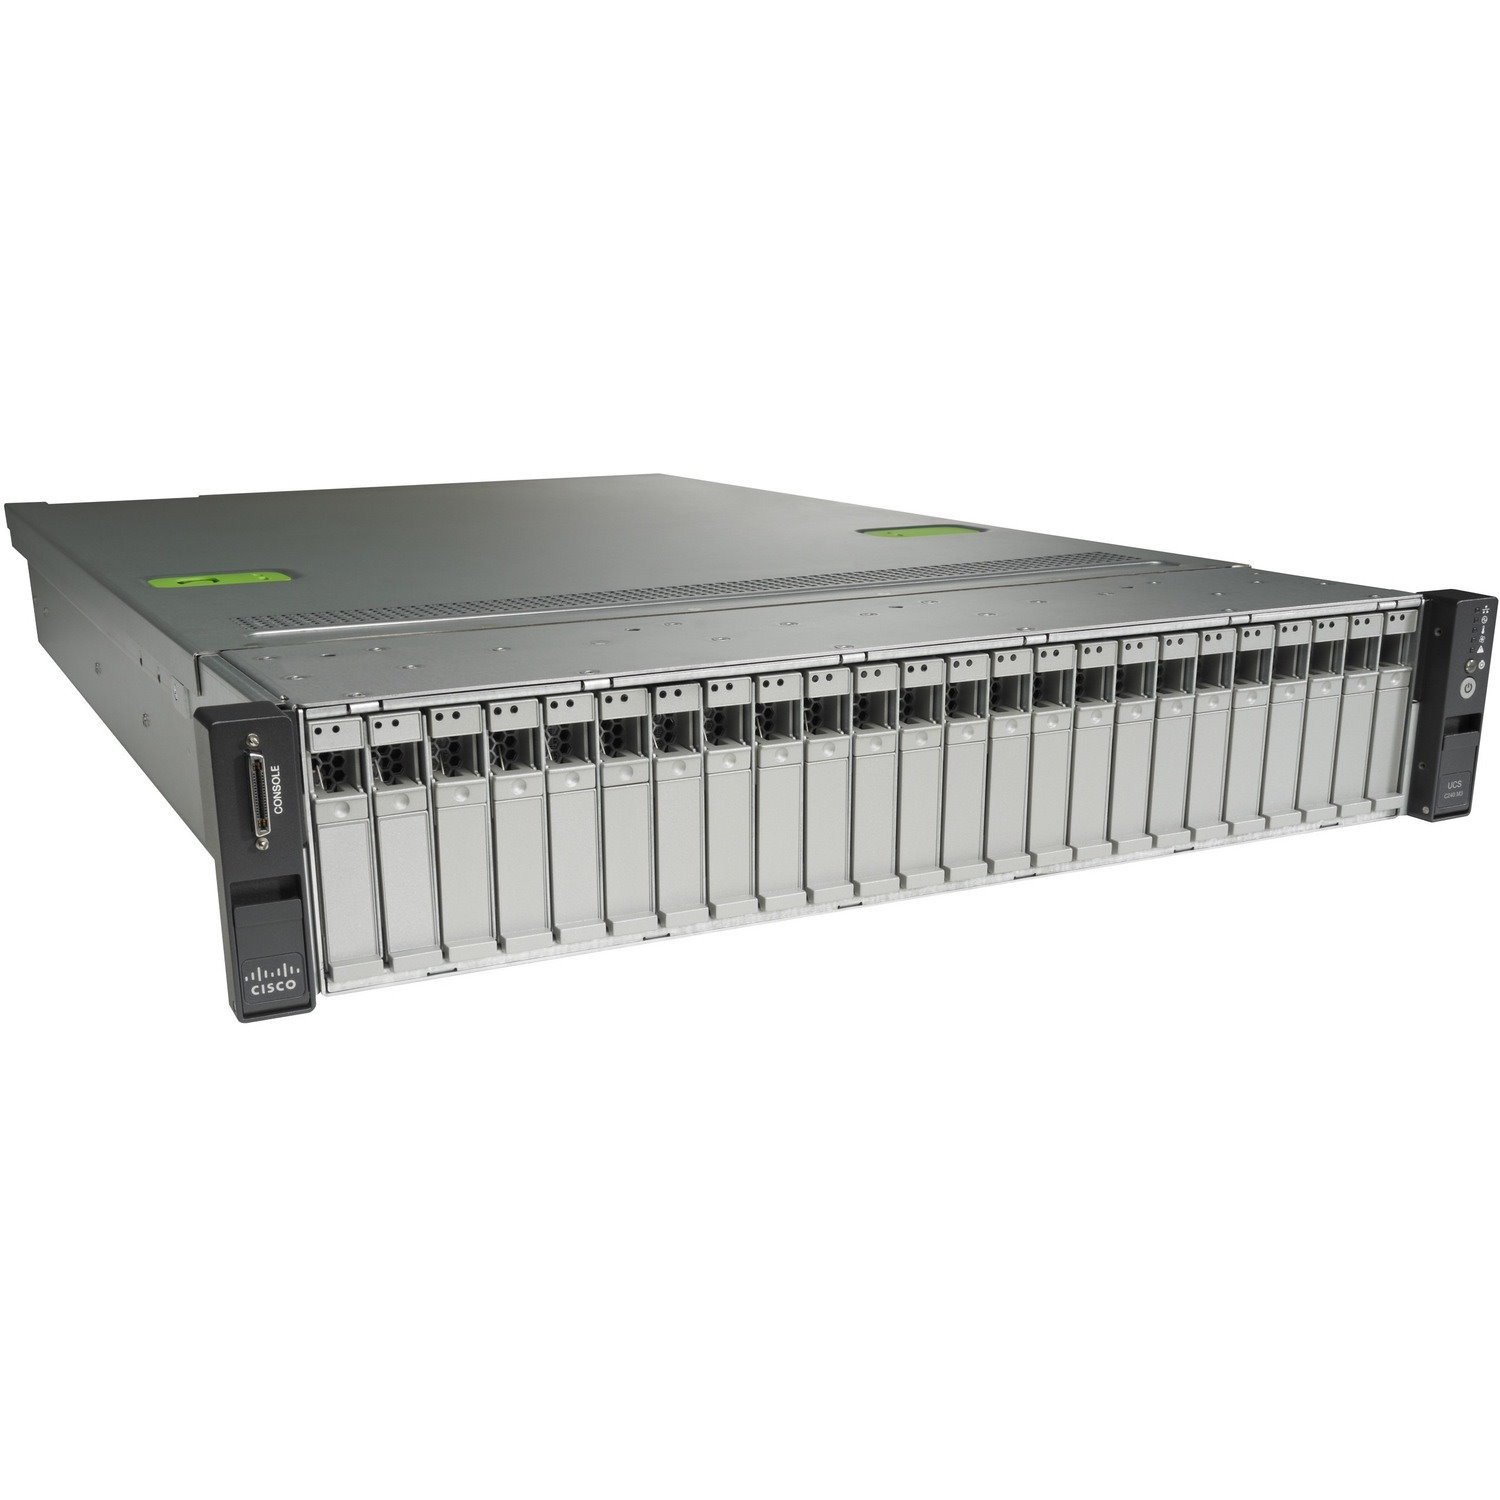 Cisco C240 M3 2U Rack Server - 2 x Intel Xeon E5-2660 v2 2.20 GHz - 32 GB RAM - 6Gb/s SAS, Serial ATA/600 Controller - Refurbished